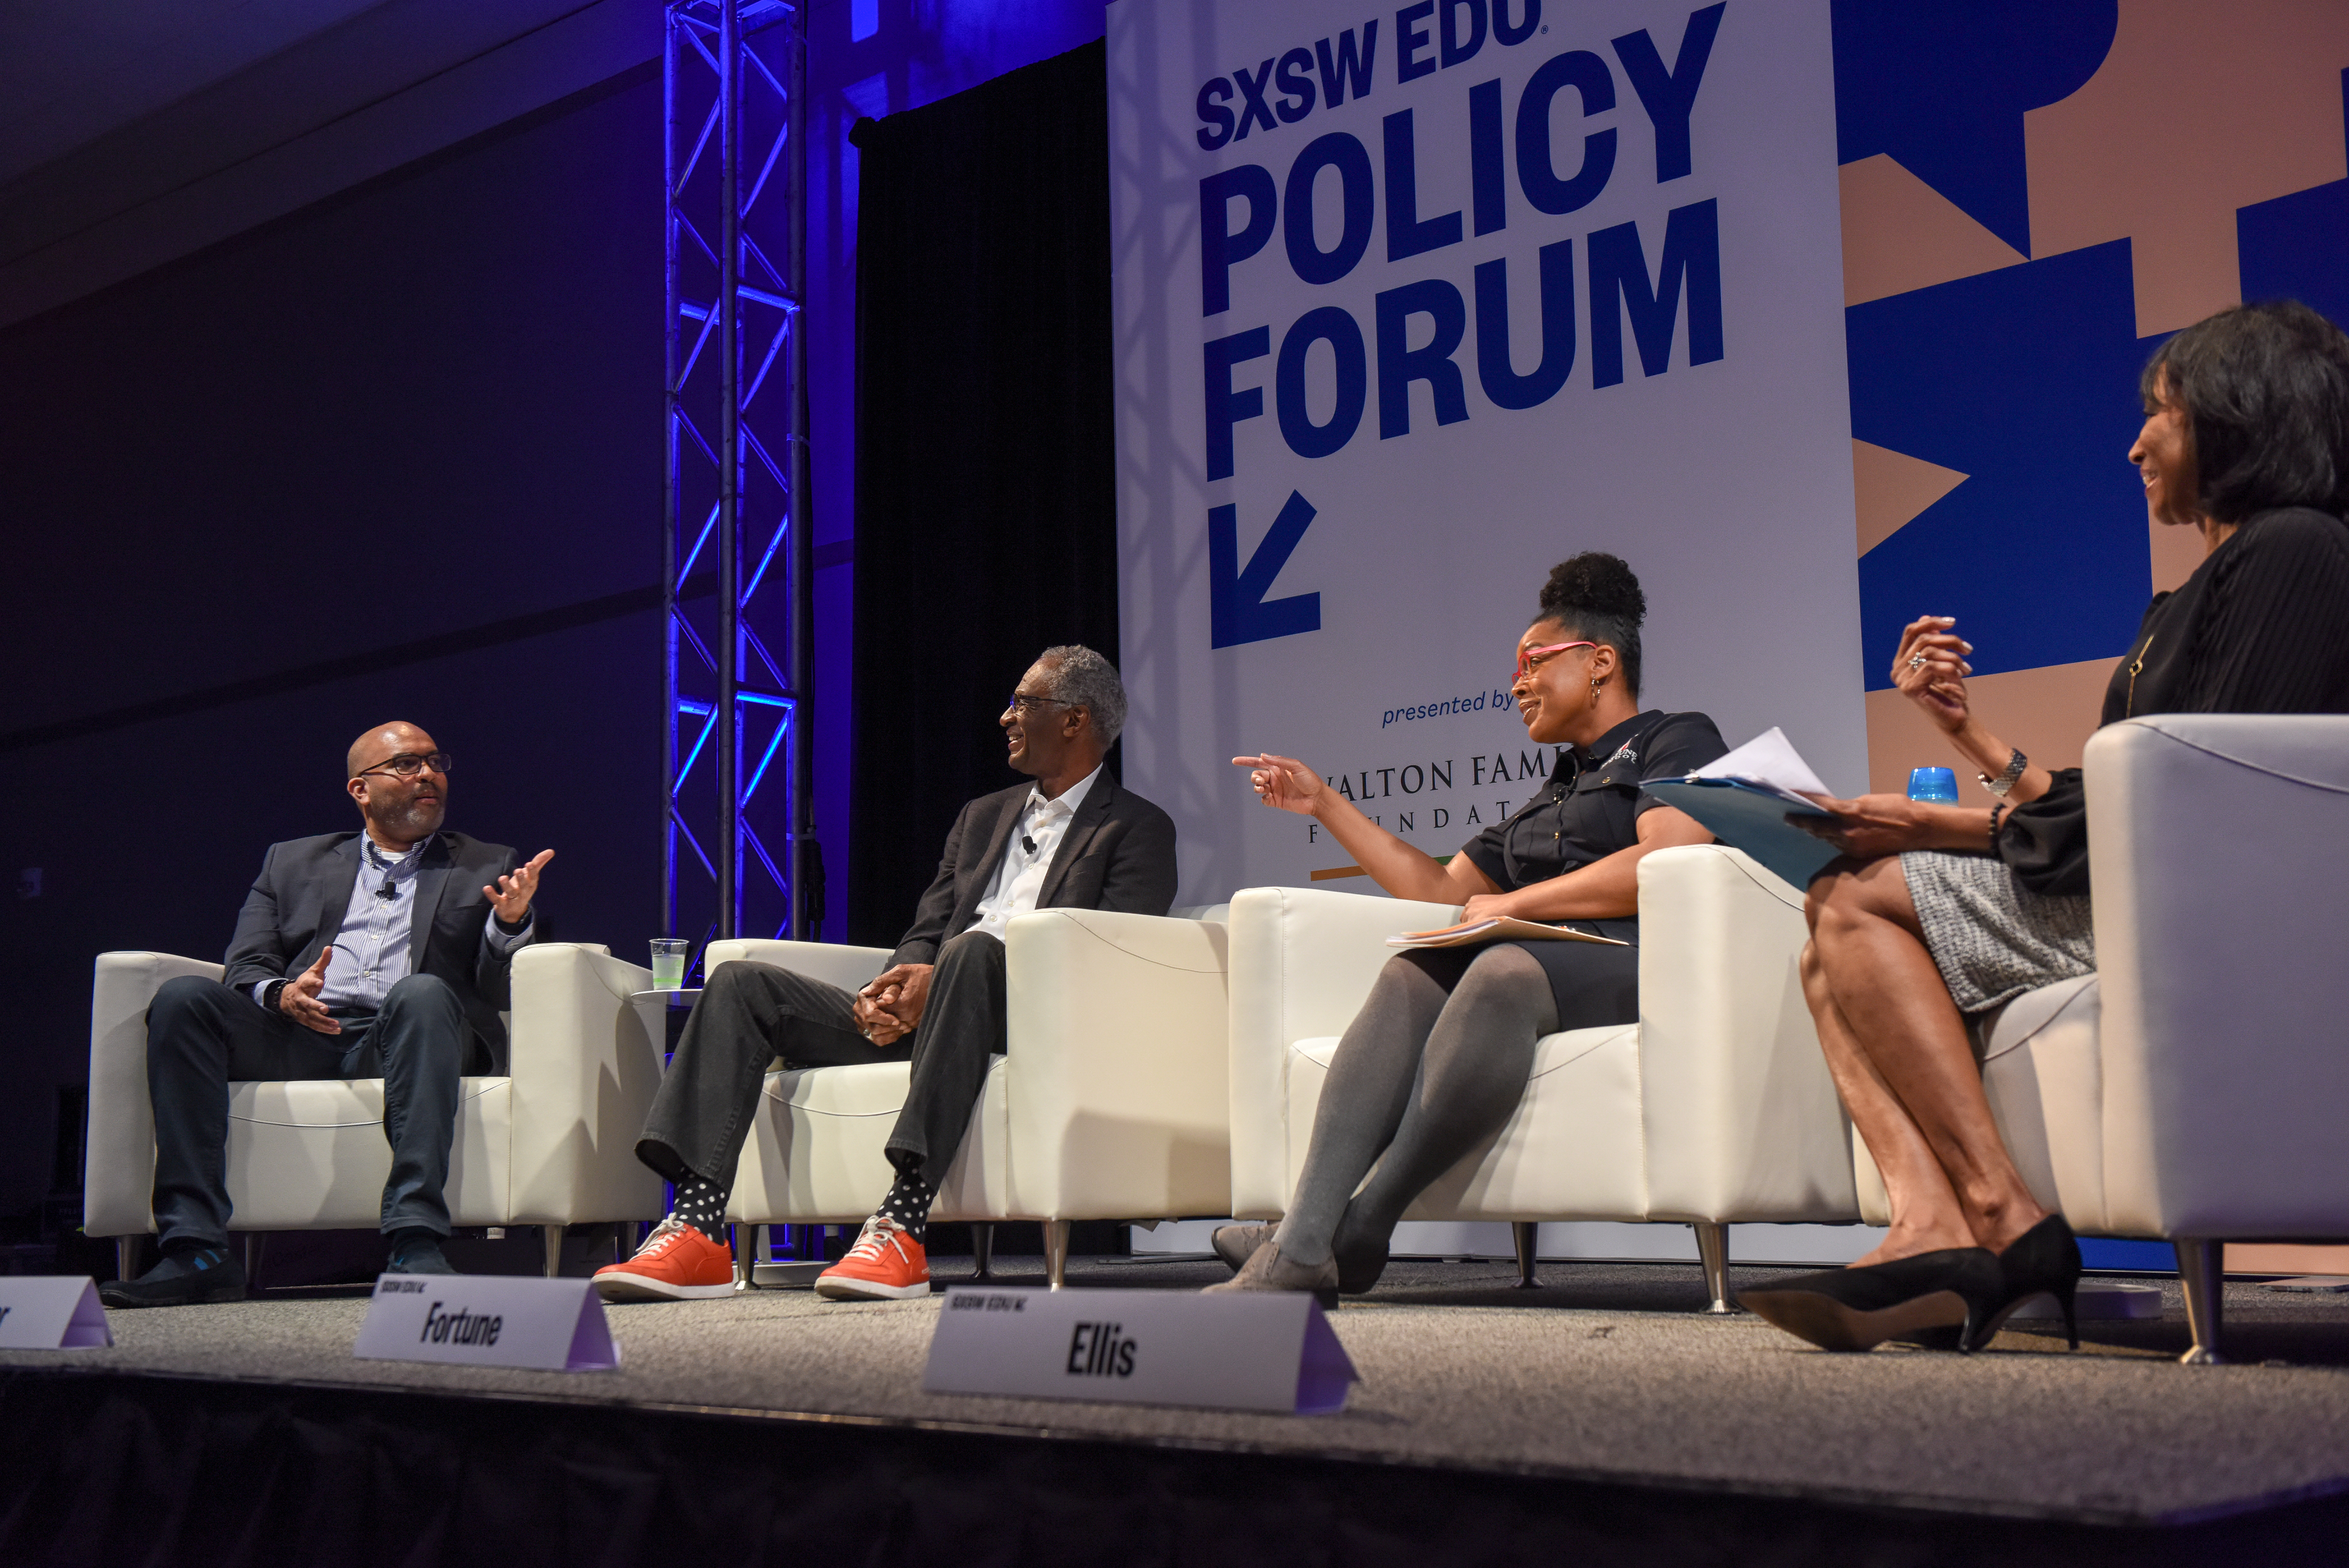 Howard Fuller, Margaret Fortune, Chris Stewart, and Rehema Ellis – SXSW EDU 2018, Black Education In America, Policy Forum session. Photo by Tico Mendoza.